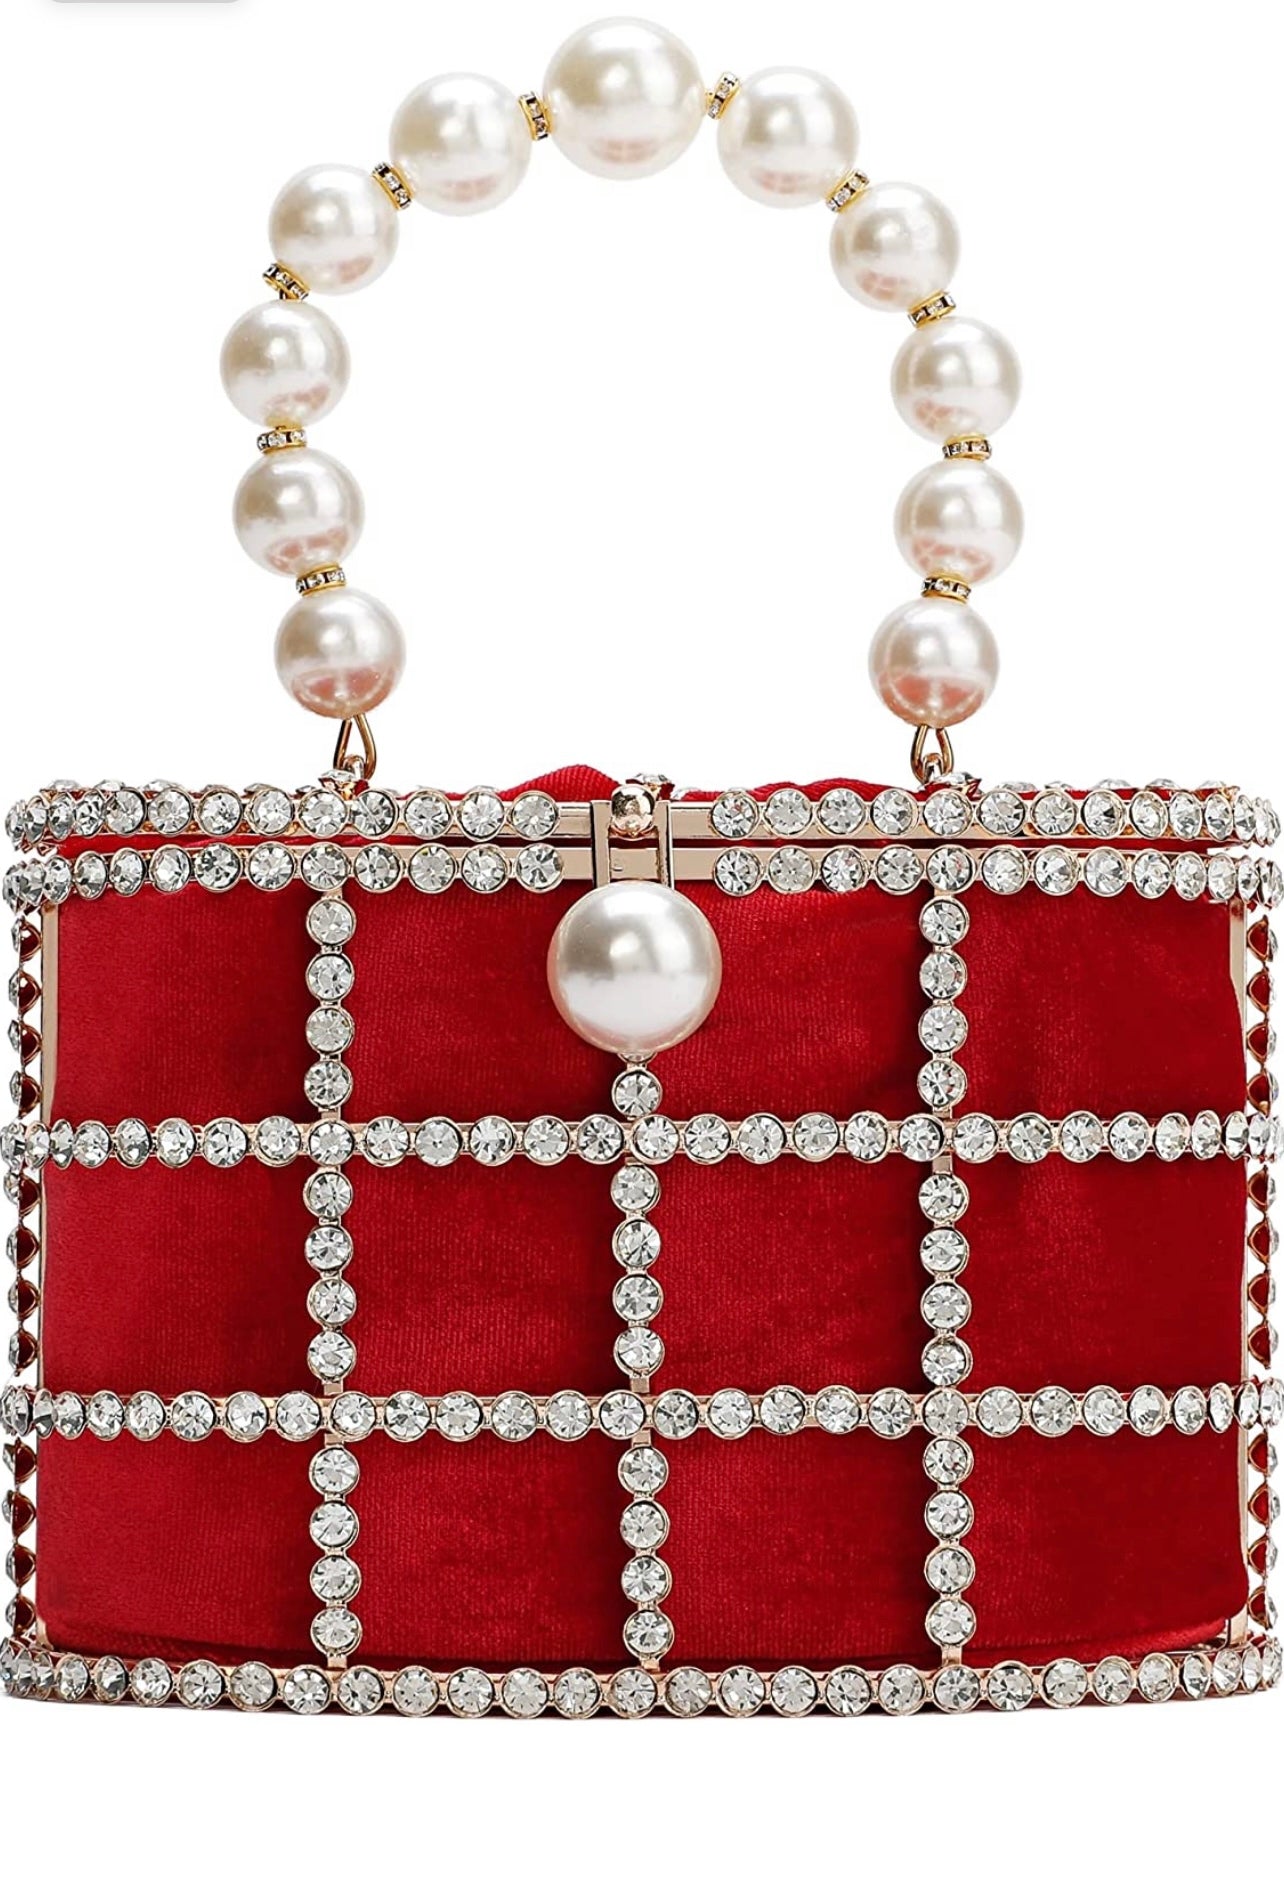 MOTHER OF PEARL Inlaid Brass handcrafted handbag, Wedding Designer clutch  purse | eBay